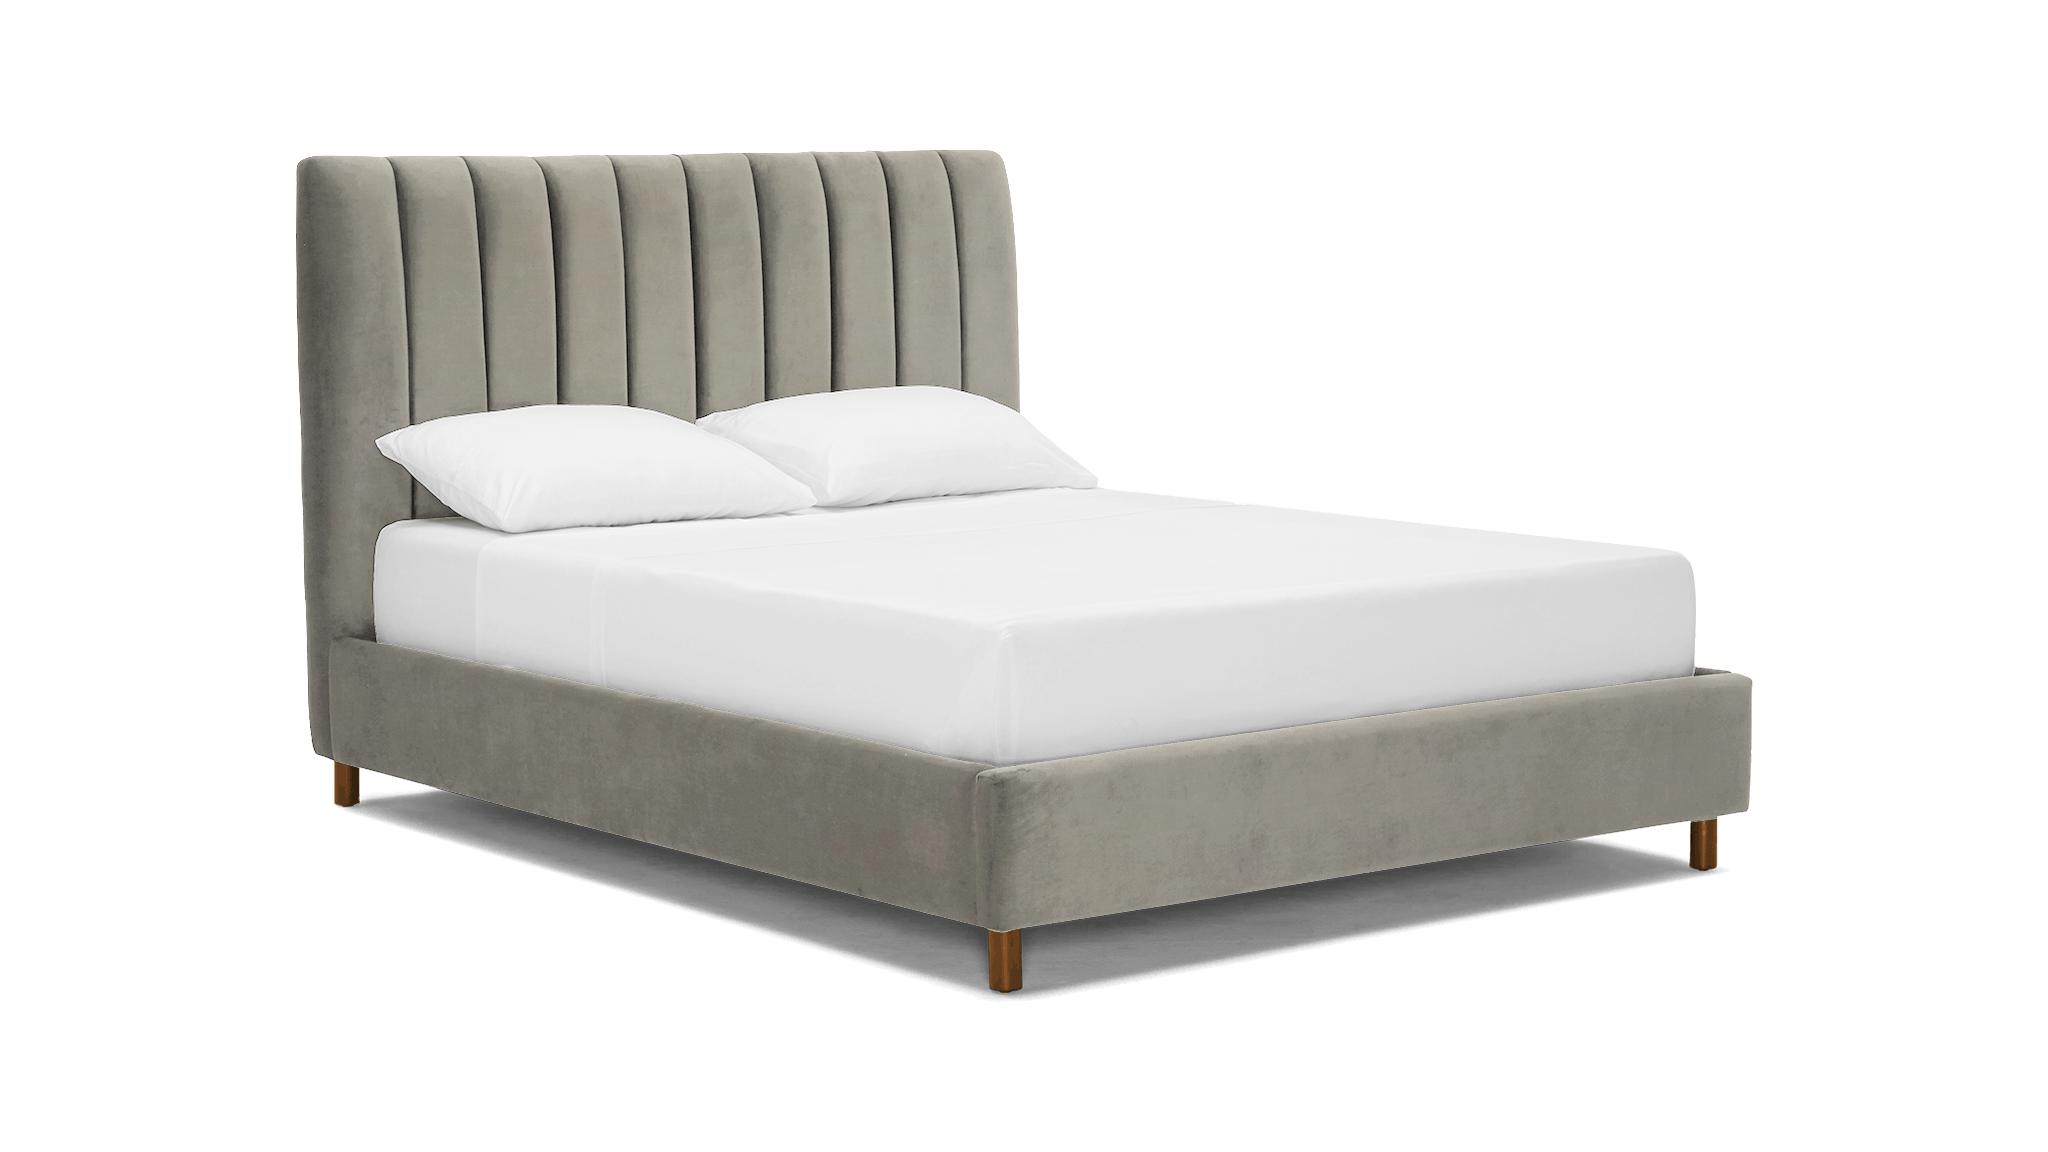 Gray Lotta Mid Century Modern Bed - Nico Ash - Mocha - Eastern King - Image 1